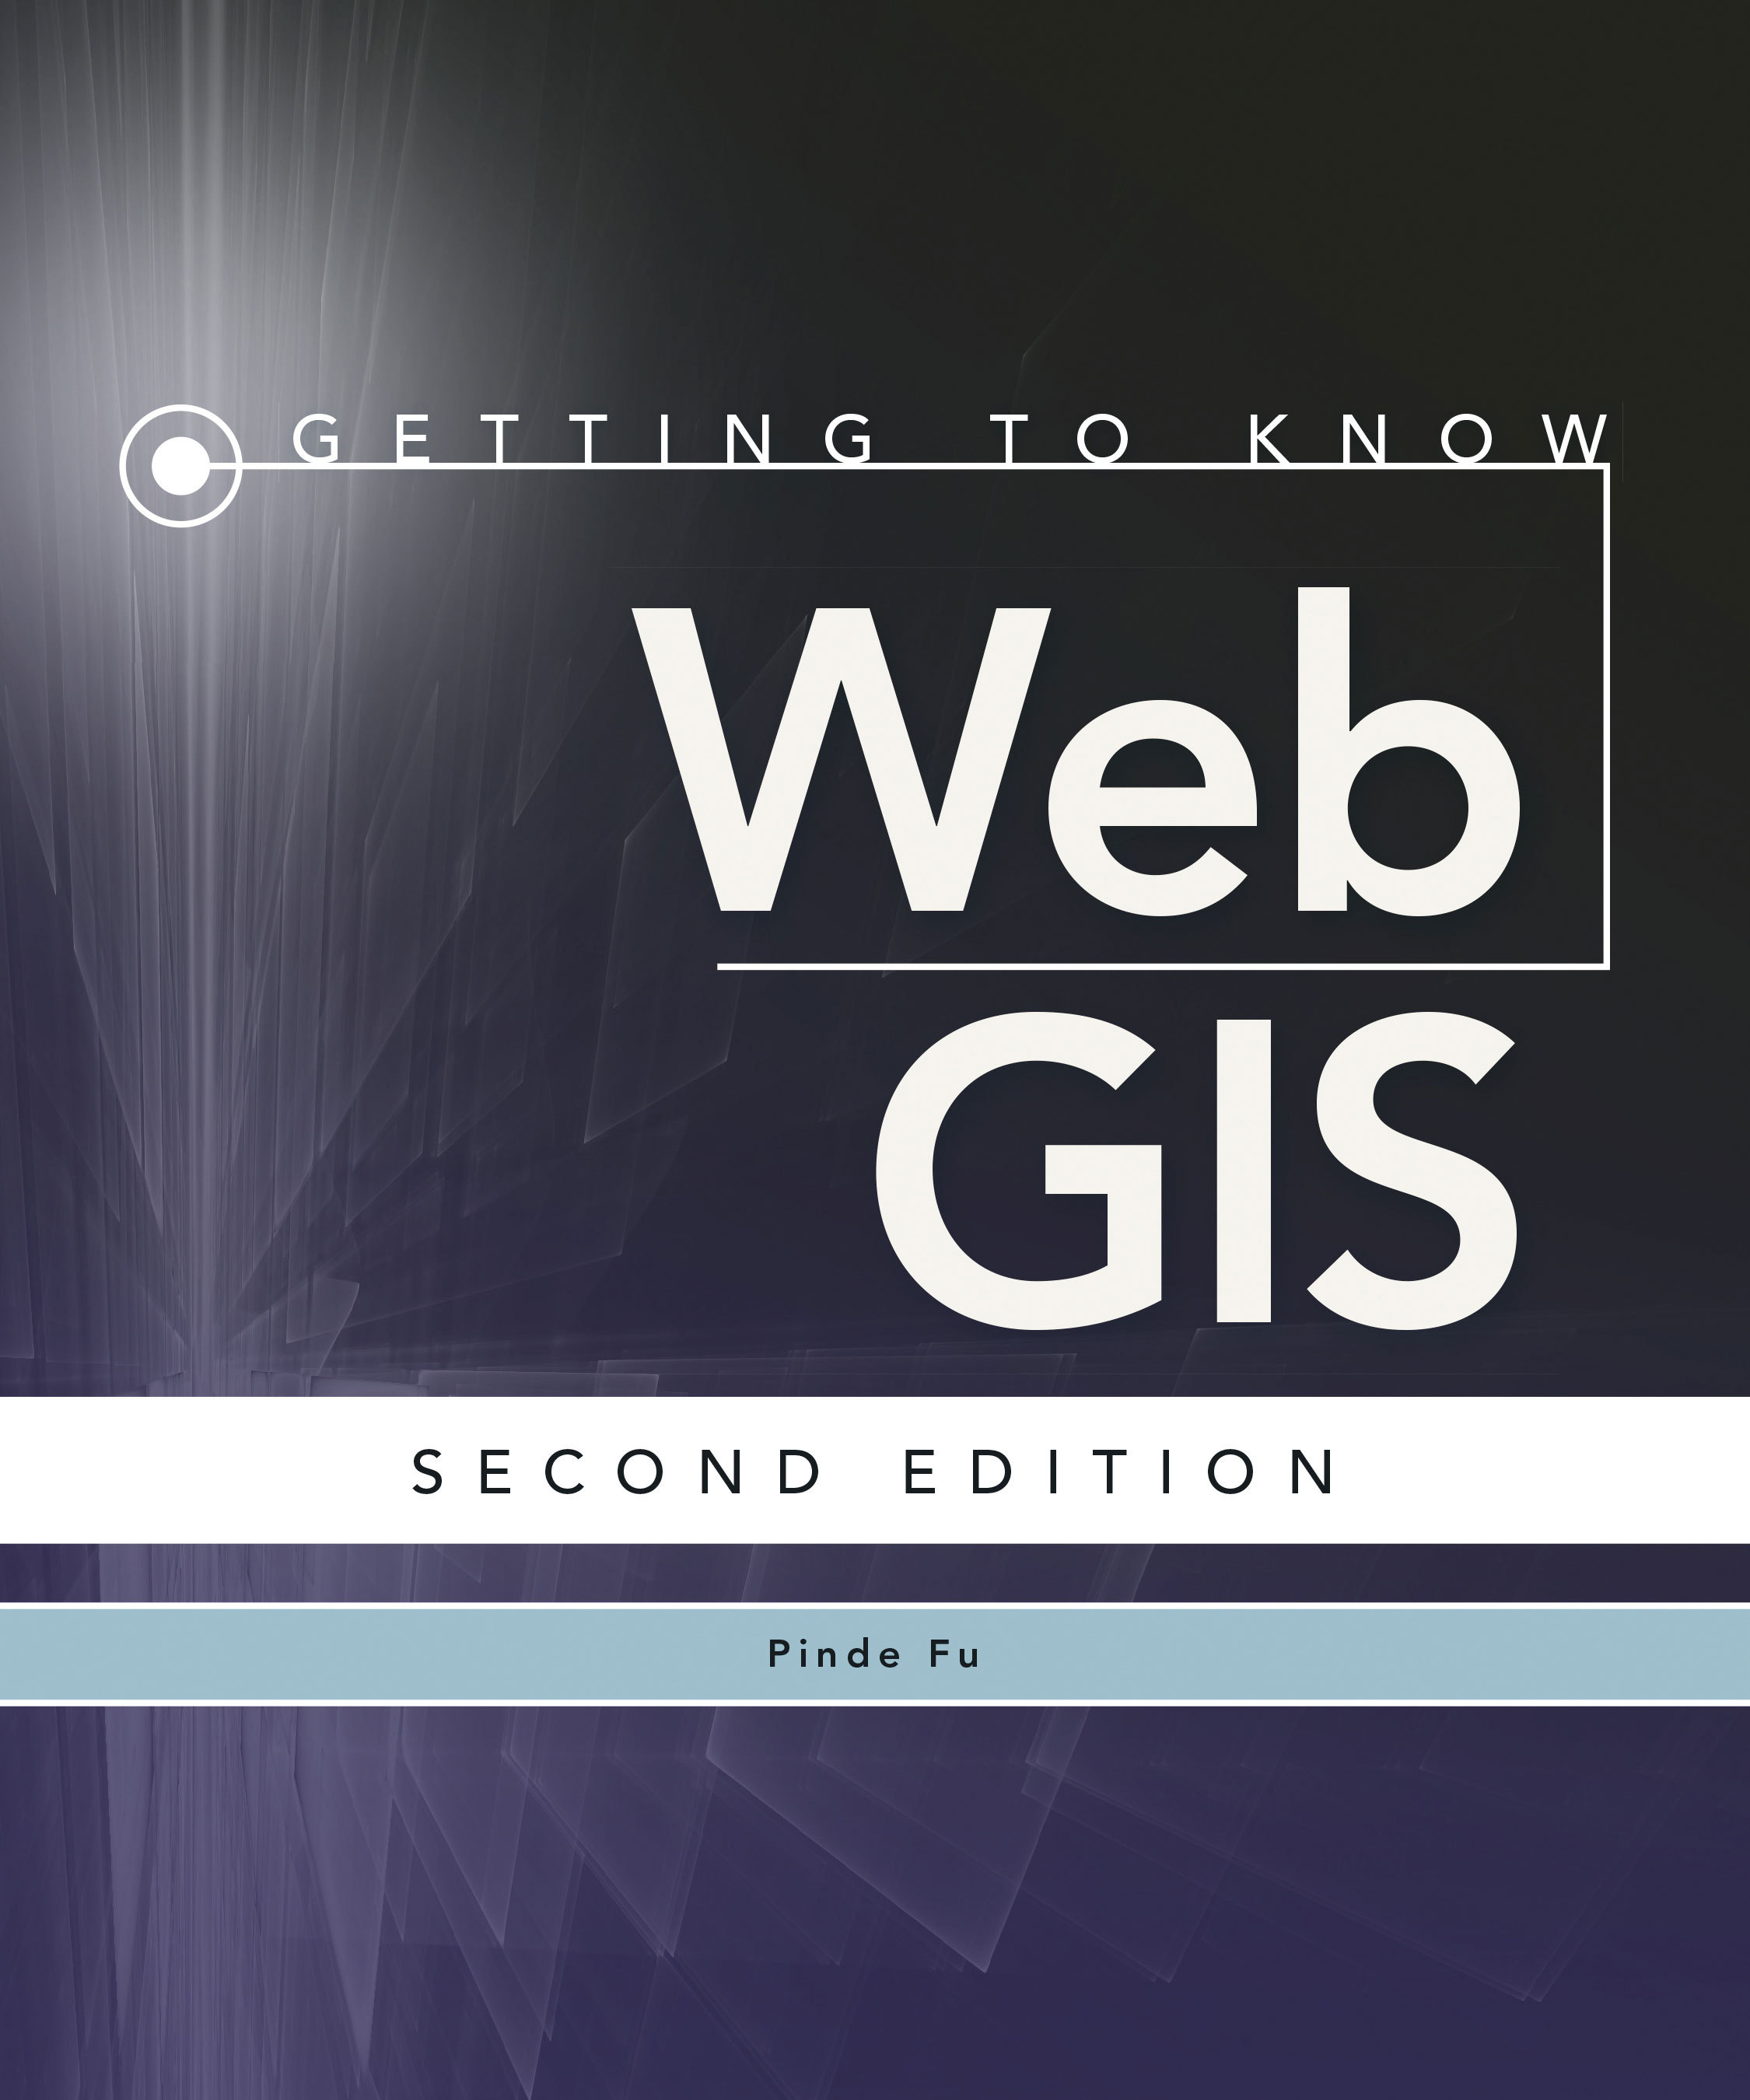 New Esri Workbook Teaches Web GIS App Building Skills